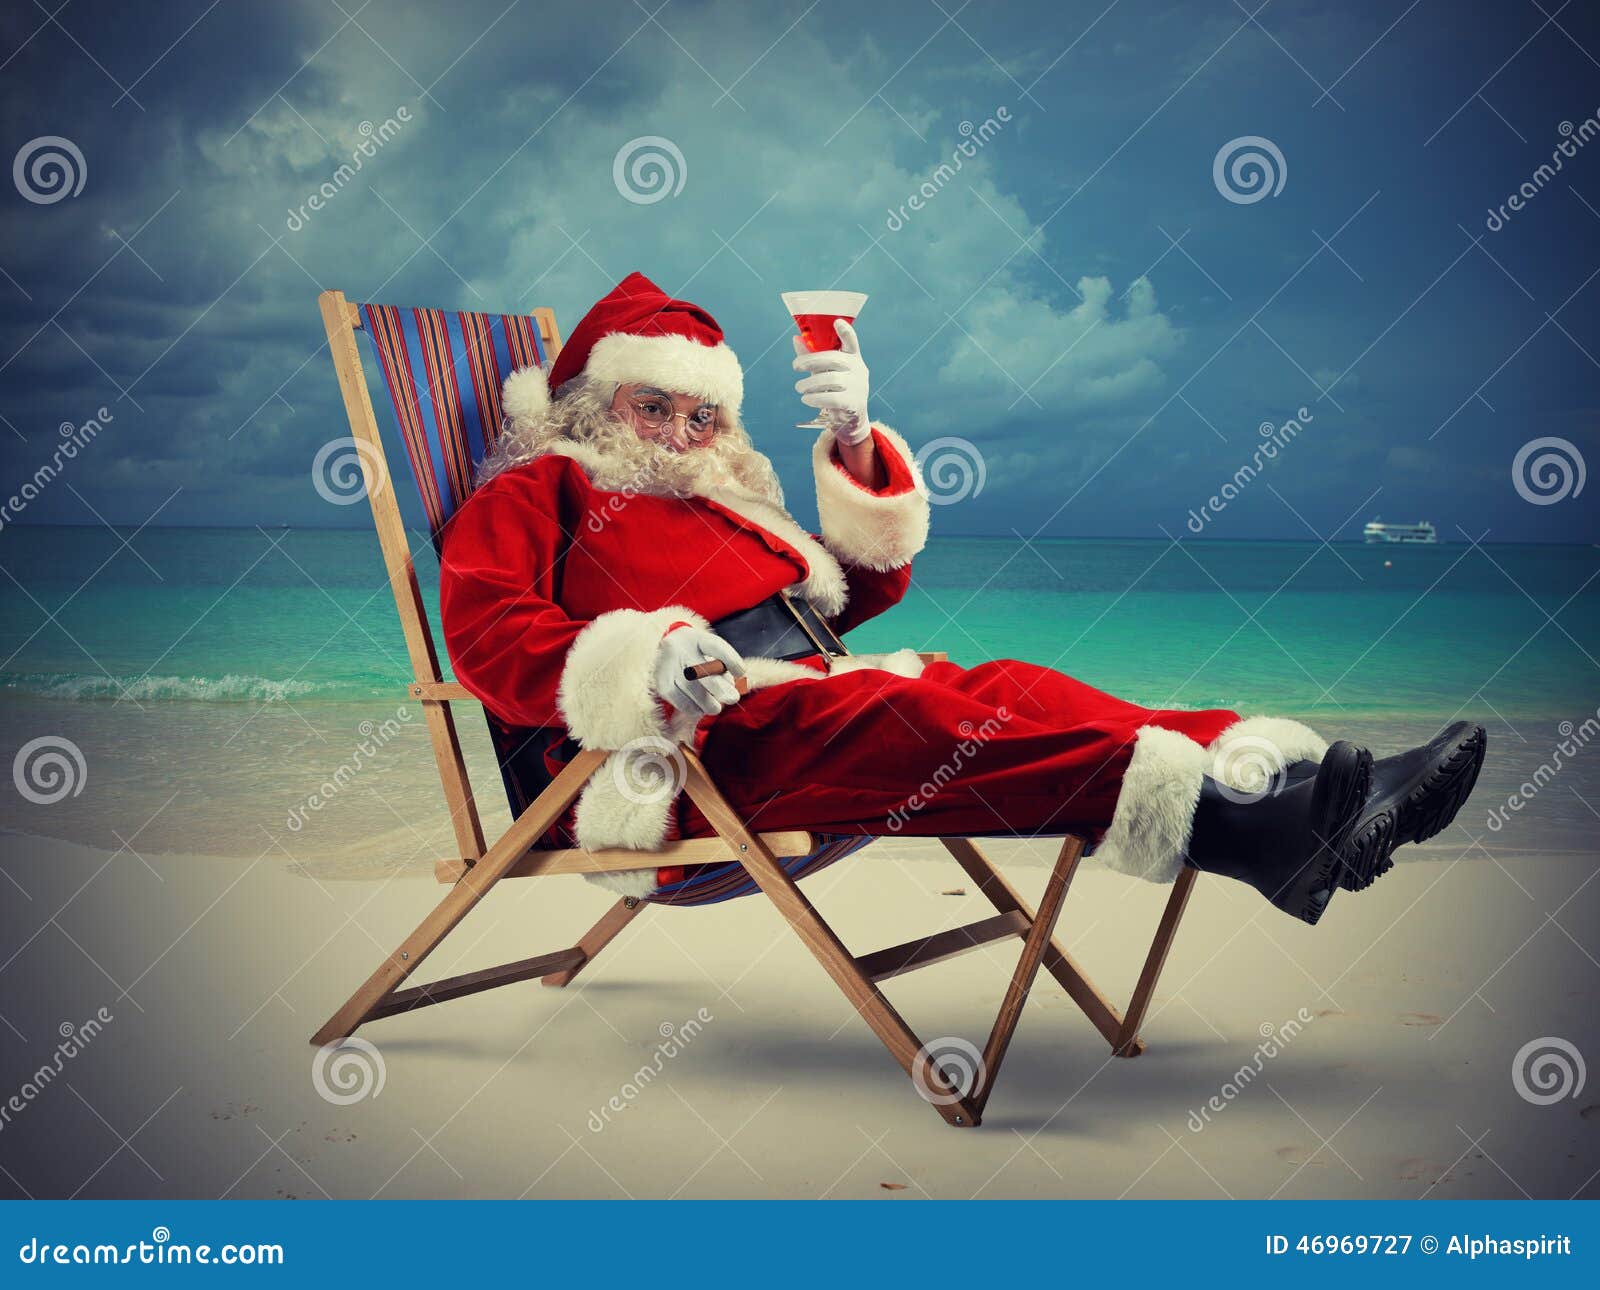   1 Décembre.Bientôt noël . - Page 2 Santa-claus-vacation-funny-relaxes-beach-46969727